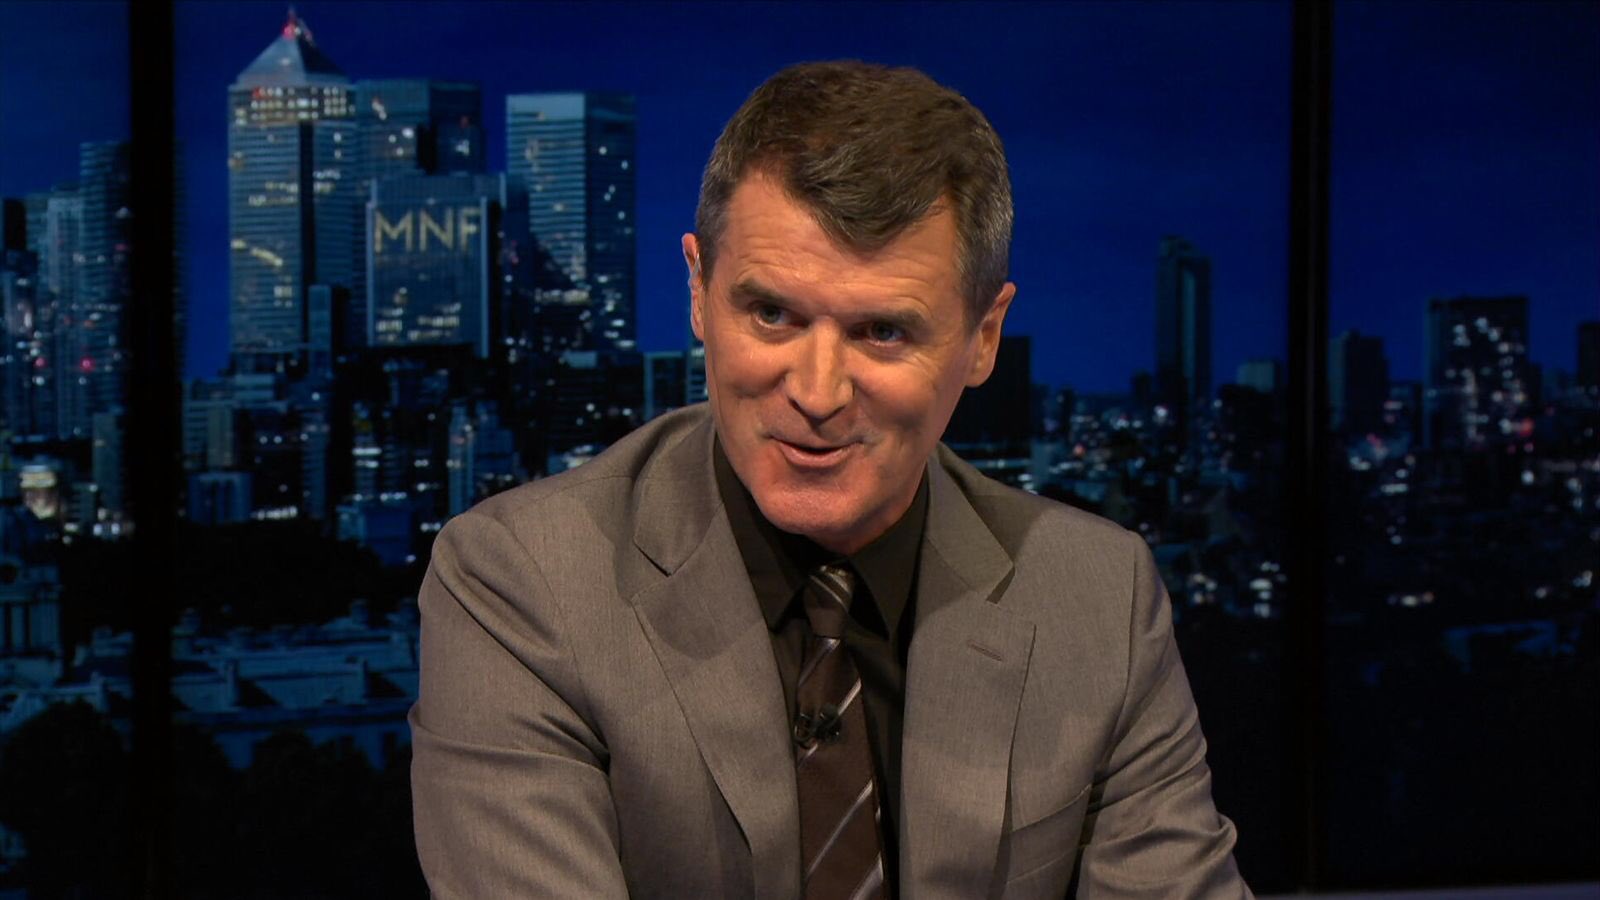 Roy Keane criticises Man Utd duo after England’s win over Belgium